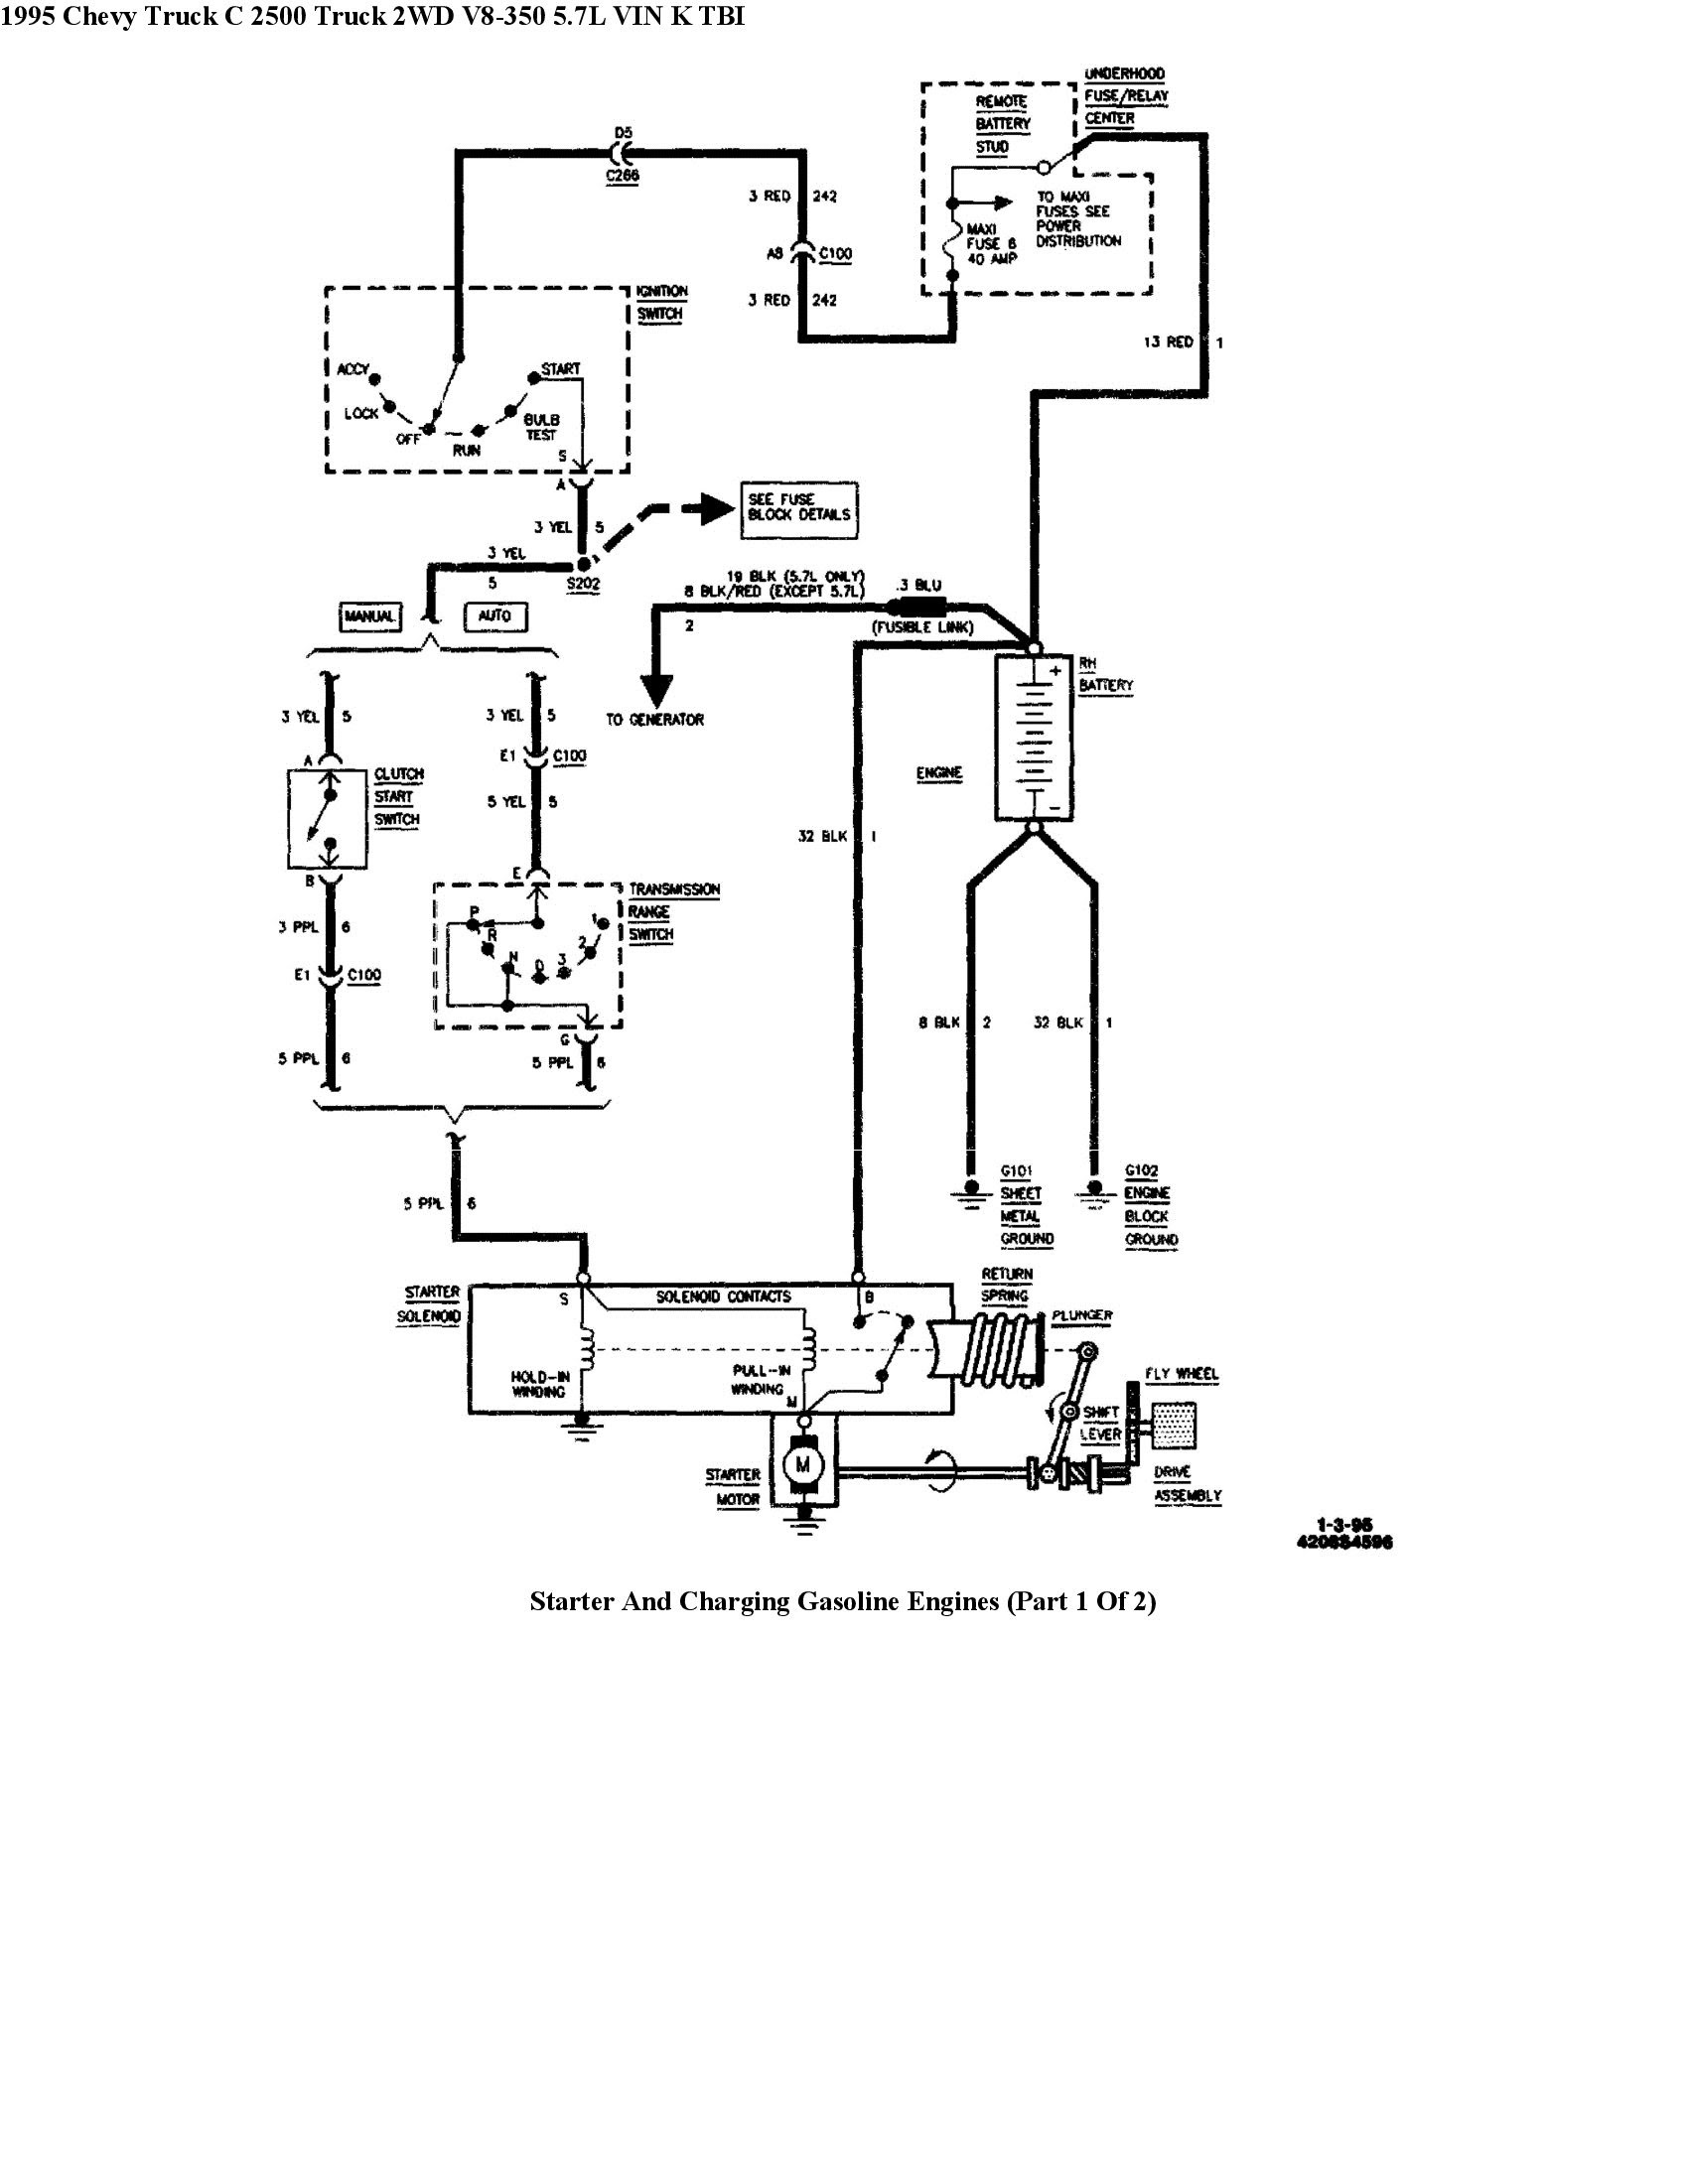 Starter Ignition Switch Wiring Diagram Chevy Wiring23